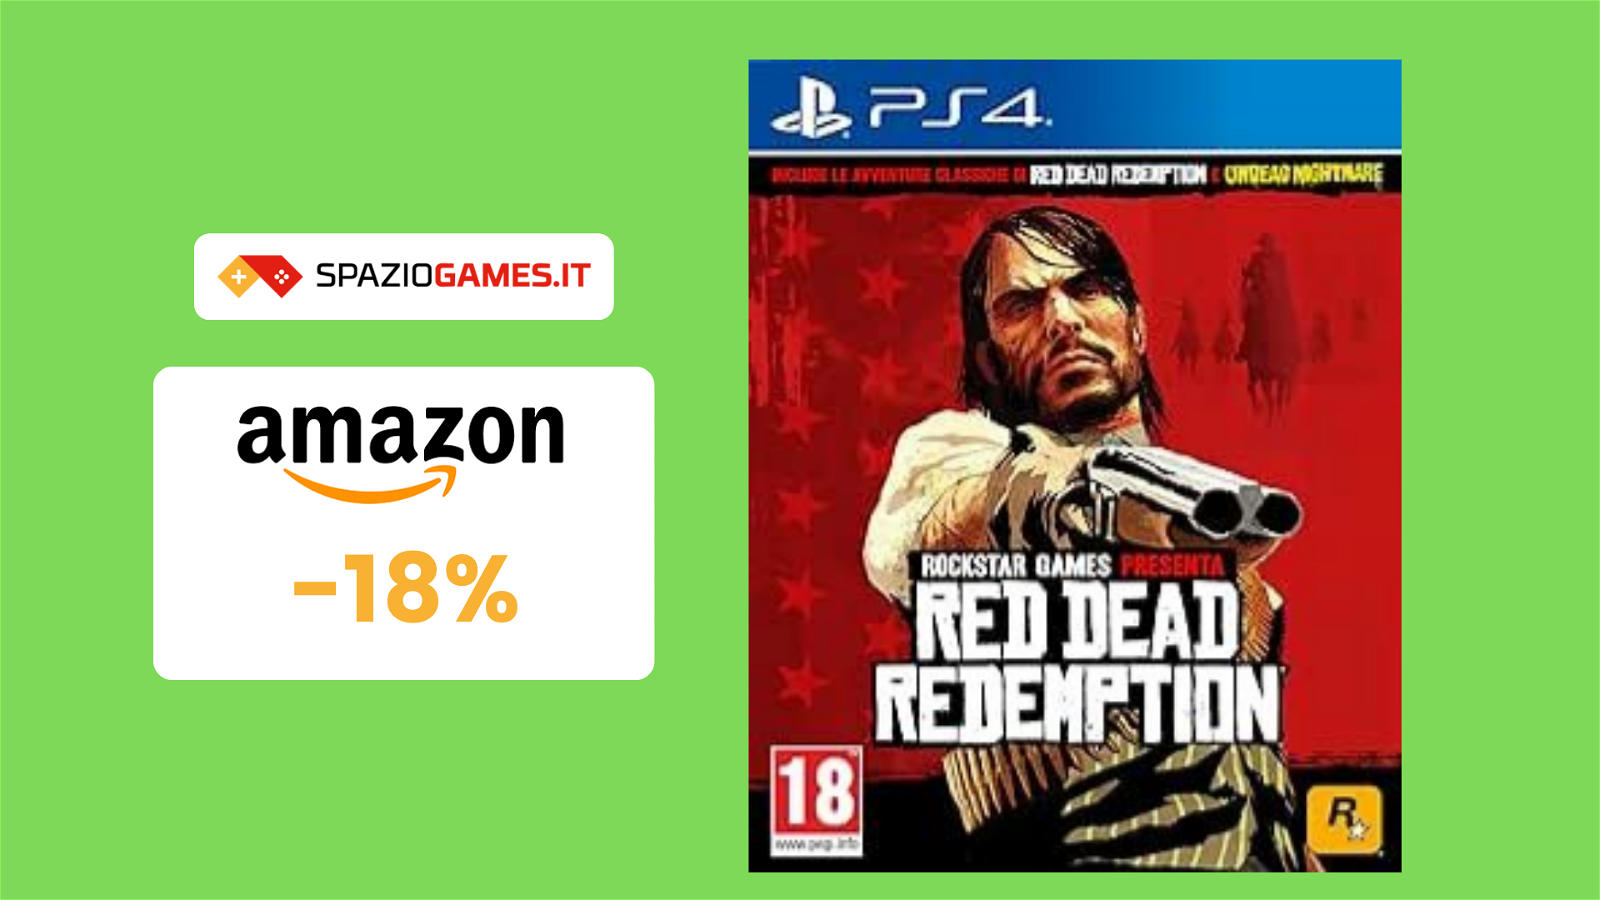 Avventure nel West con Red Dead Redemption per PS4 a 42€!